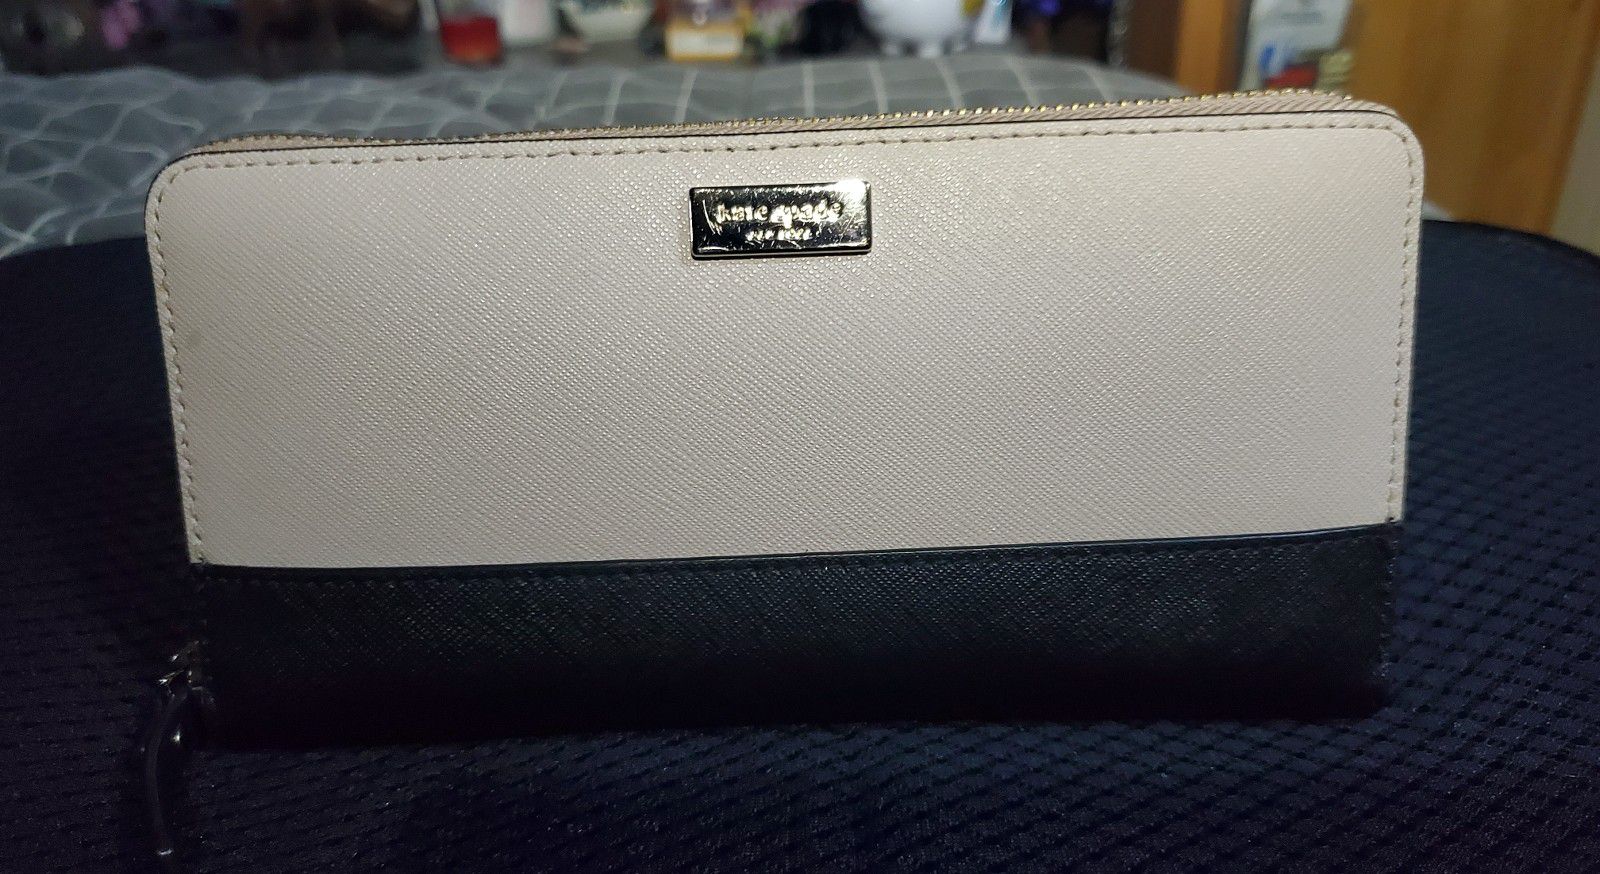 Fabulous Kate Spade cream and black  savino leather wallet. Like new